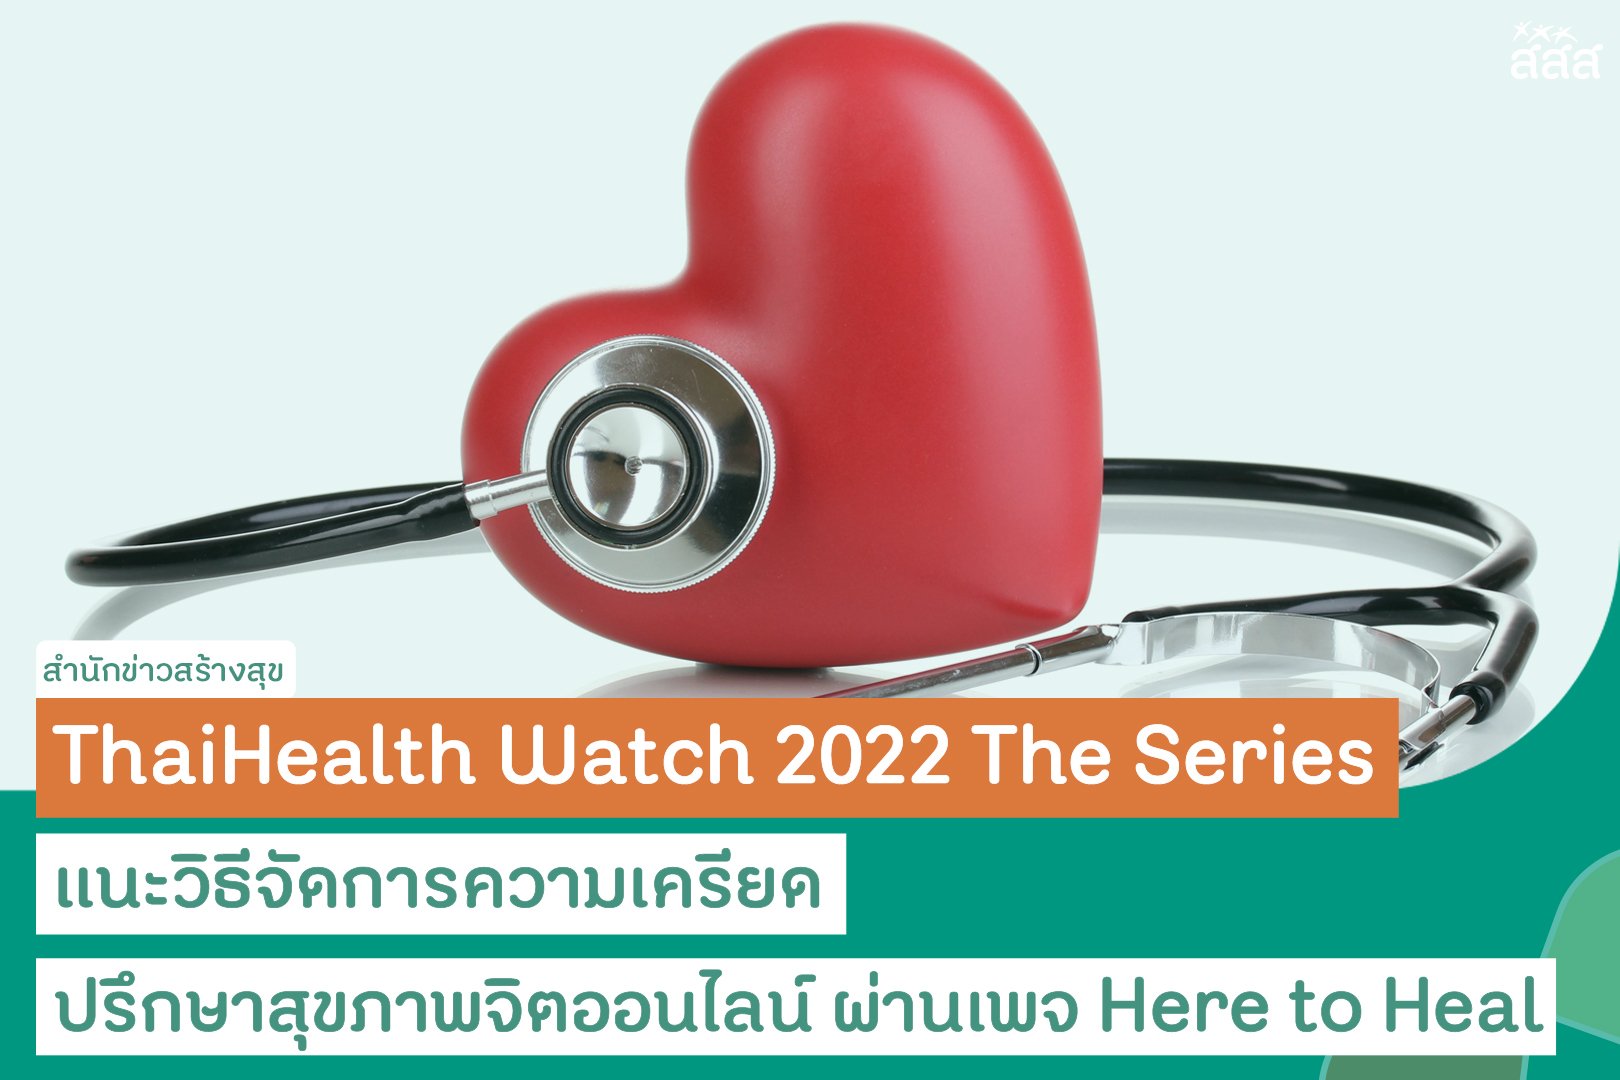 ThaiHealth Watch 2022 The Series แนะวิธีจัดการความเครียด ปรึกษาสุขภาพจิตออนไลน์ ผ่านเพจ Here to Heal thaihealth